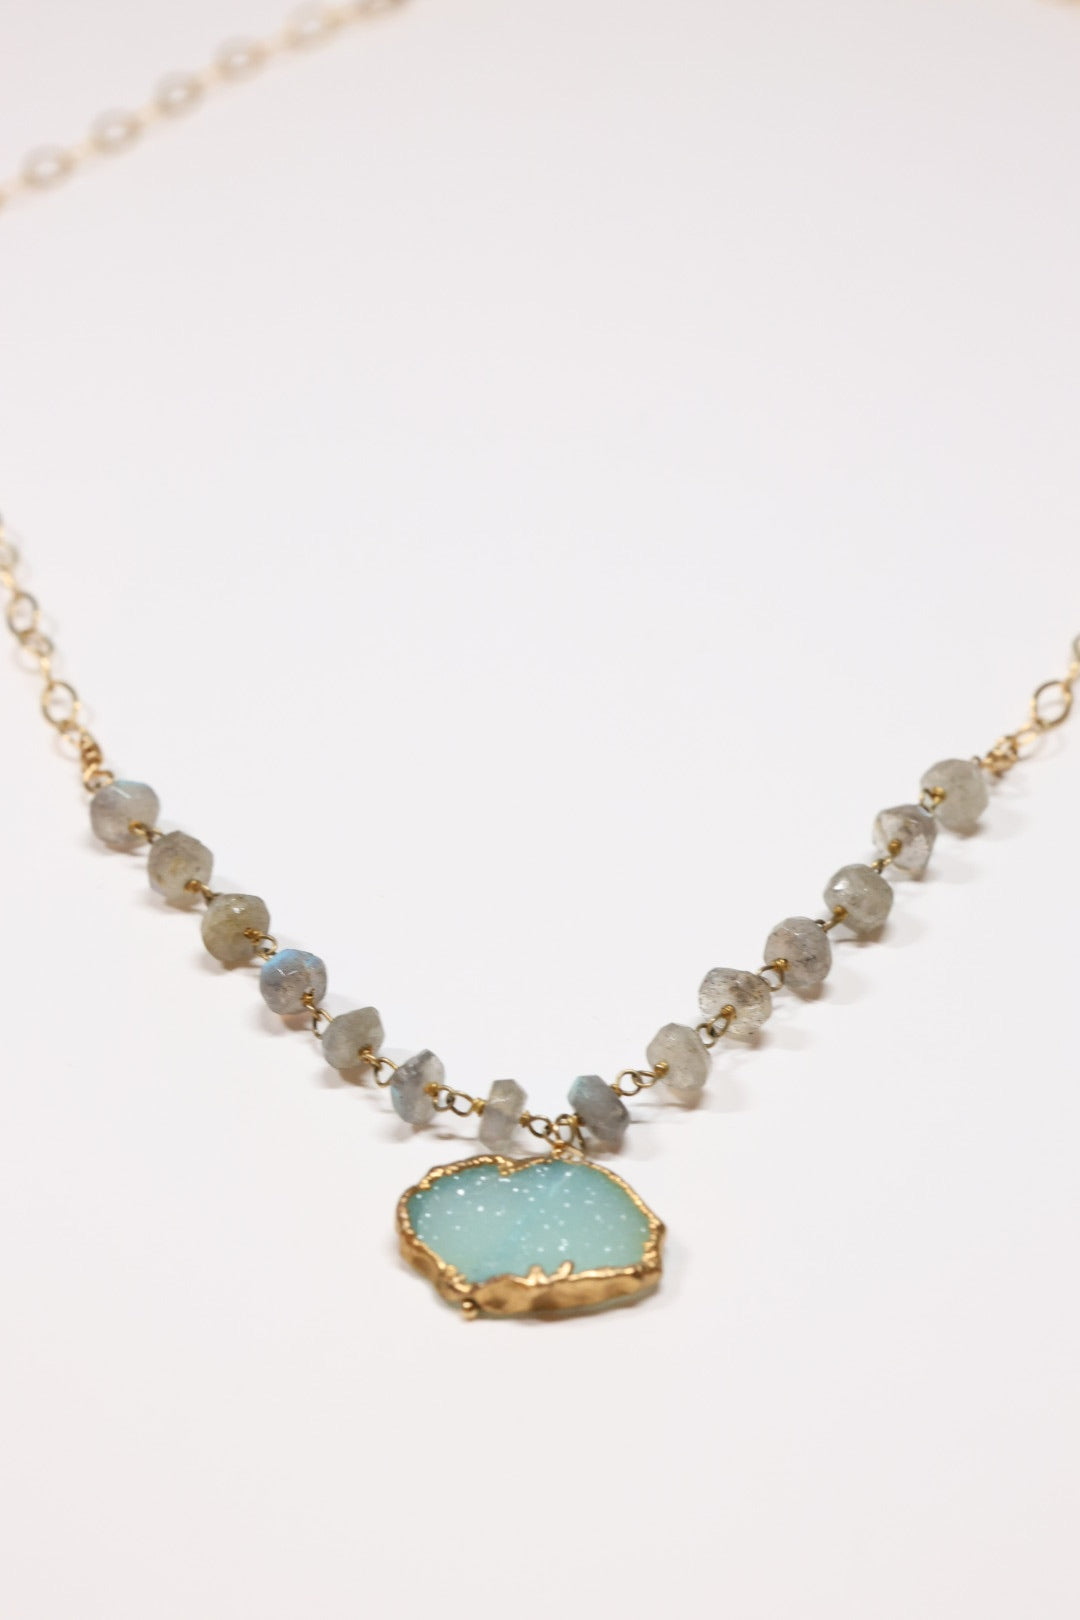 Gemstone necklace with aquamarine druzy 